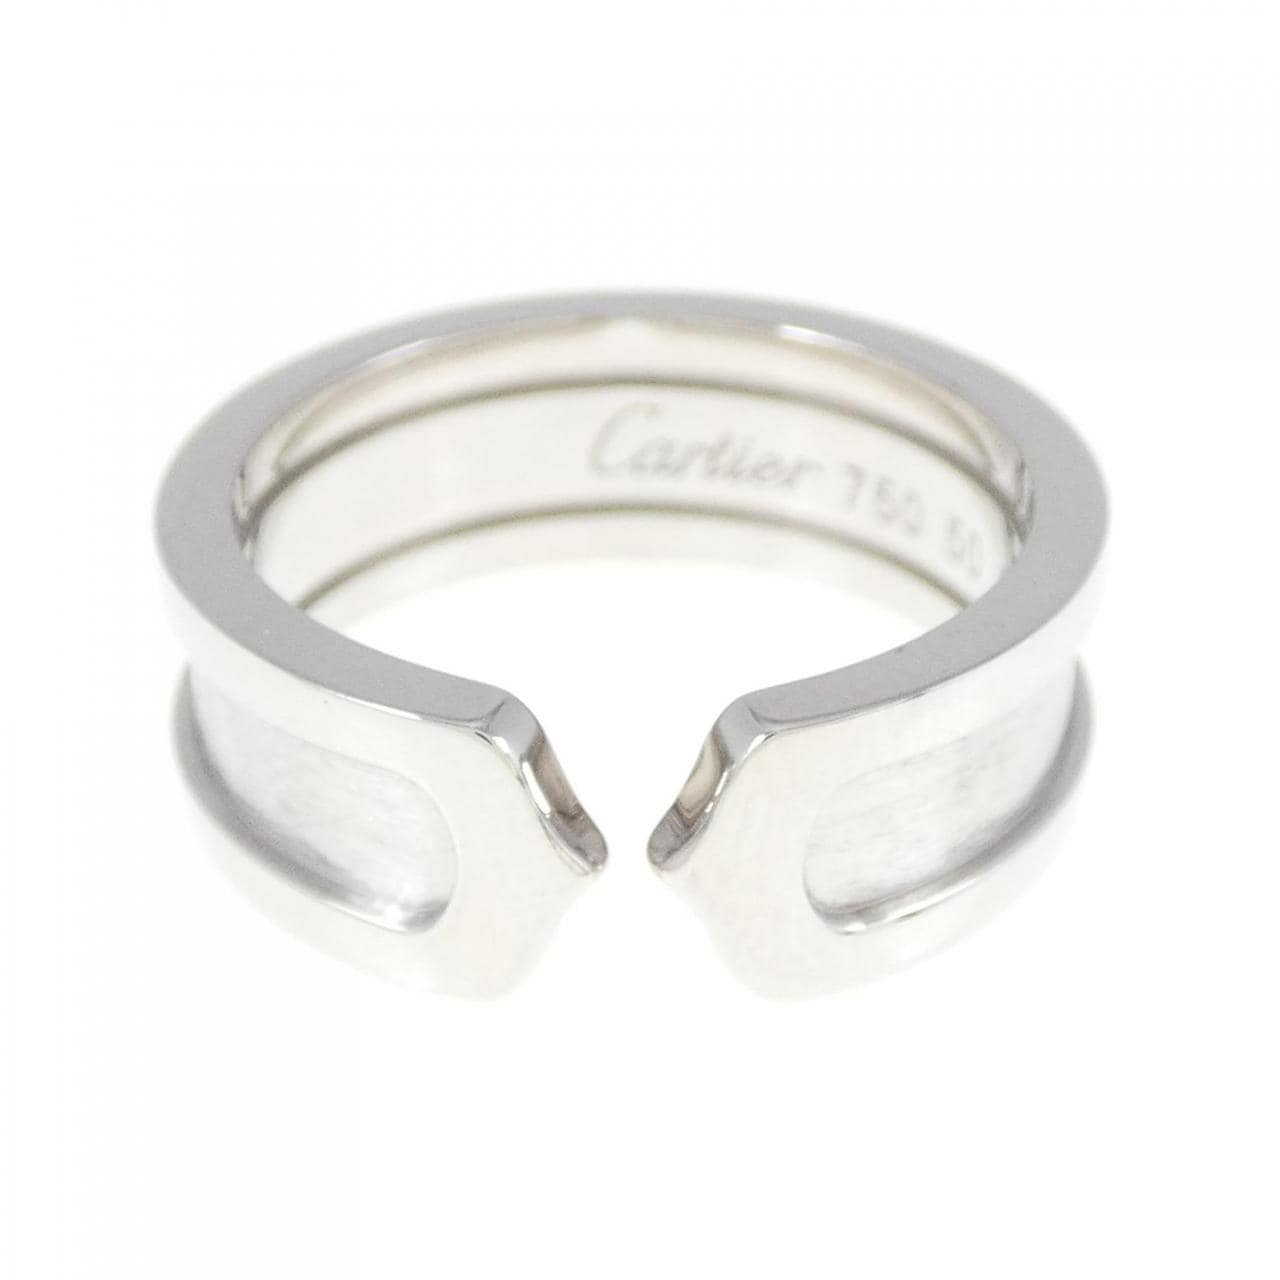 Cartier 750WG ring